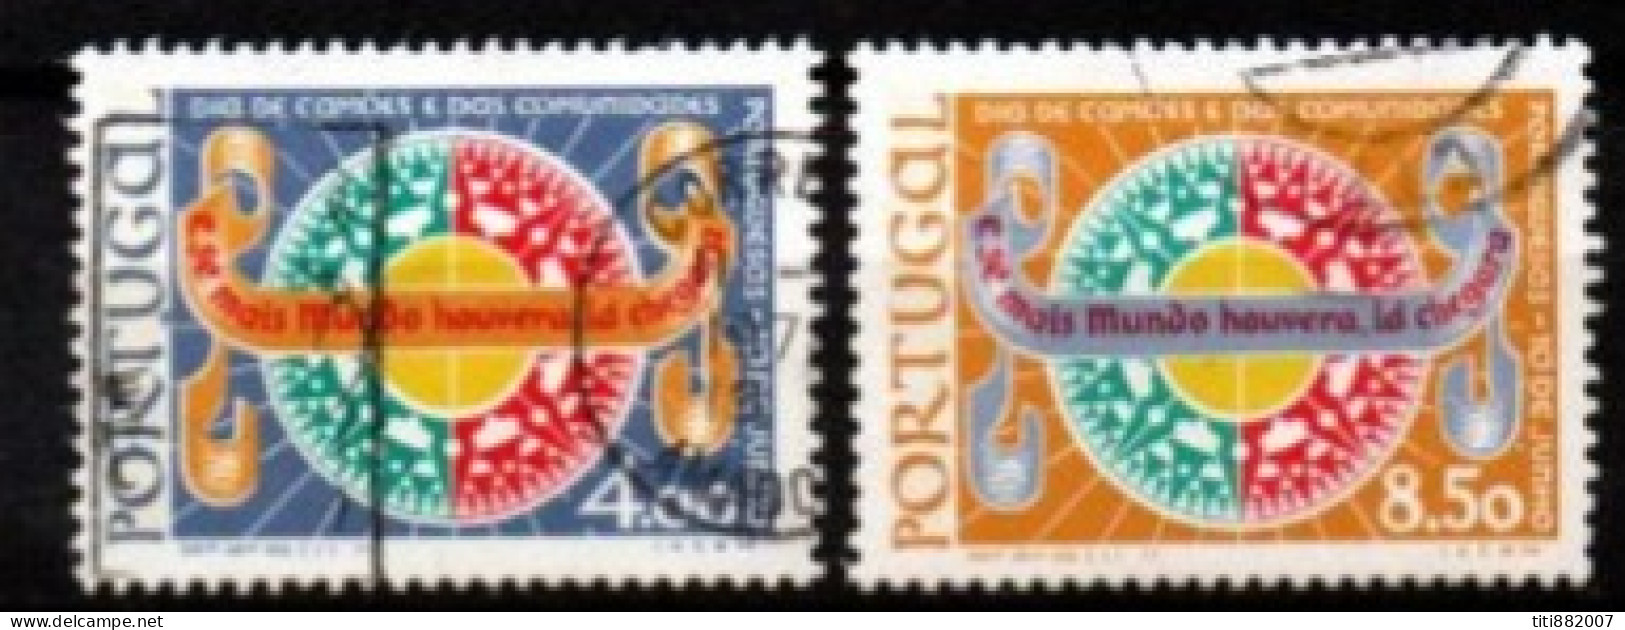 PORTUGAL    -   1977.    Y&T N° 1344 / 1345 Oblitérés . - Used Stamps